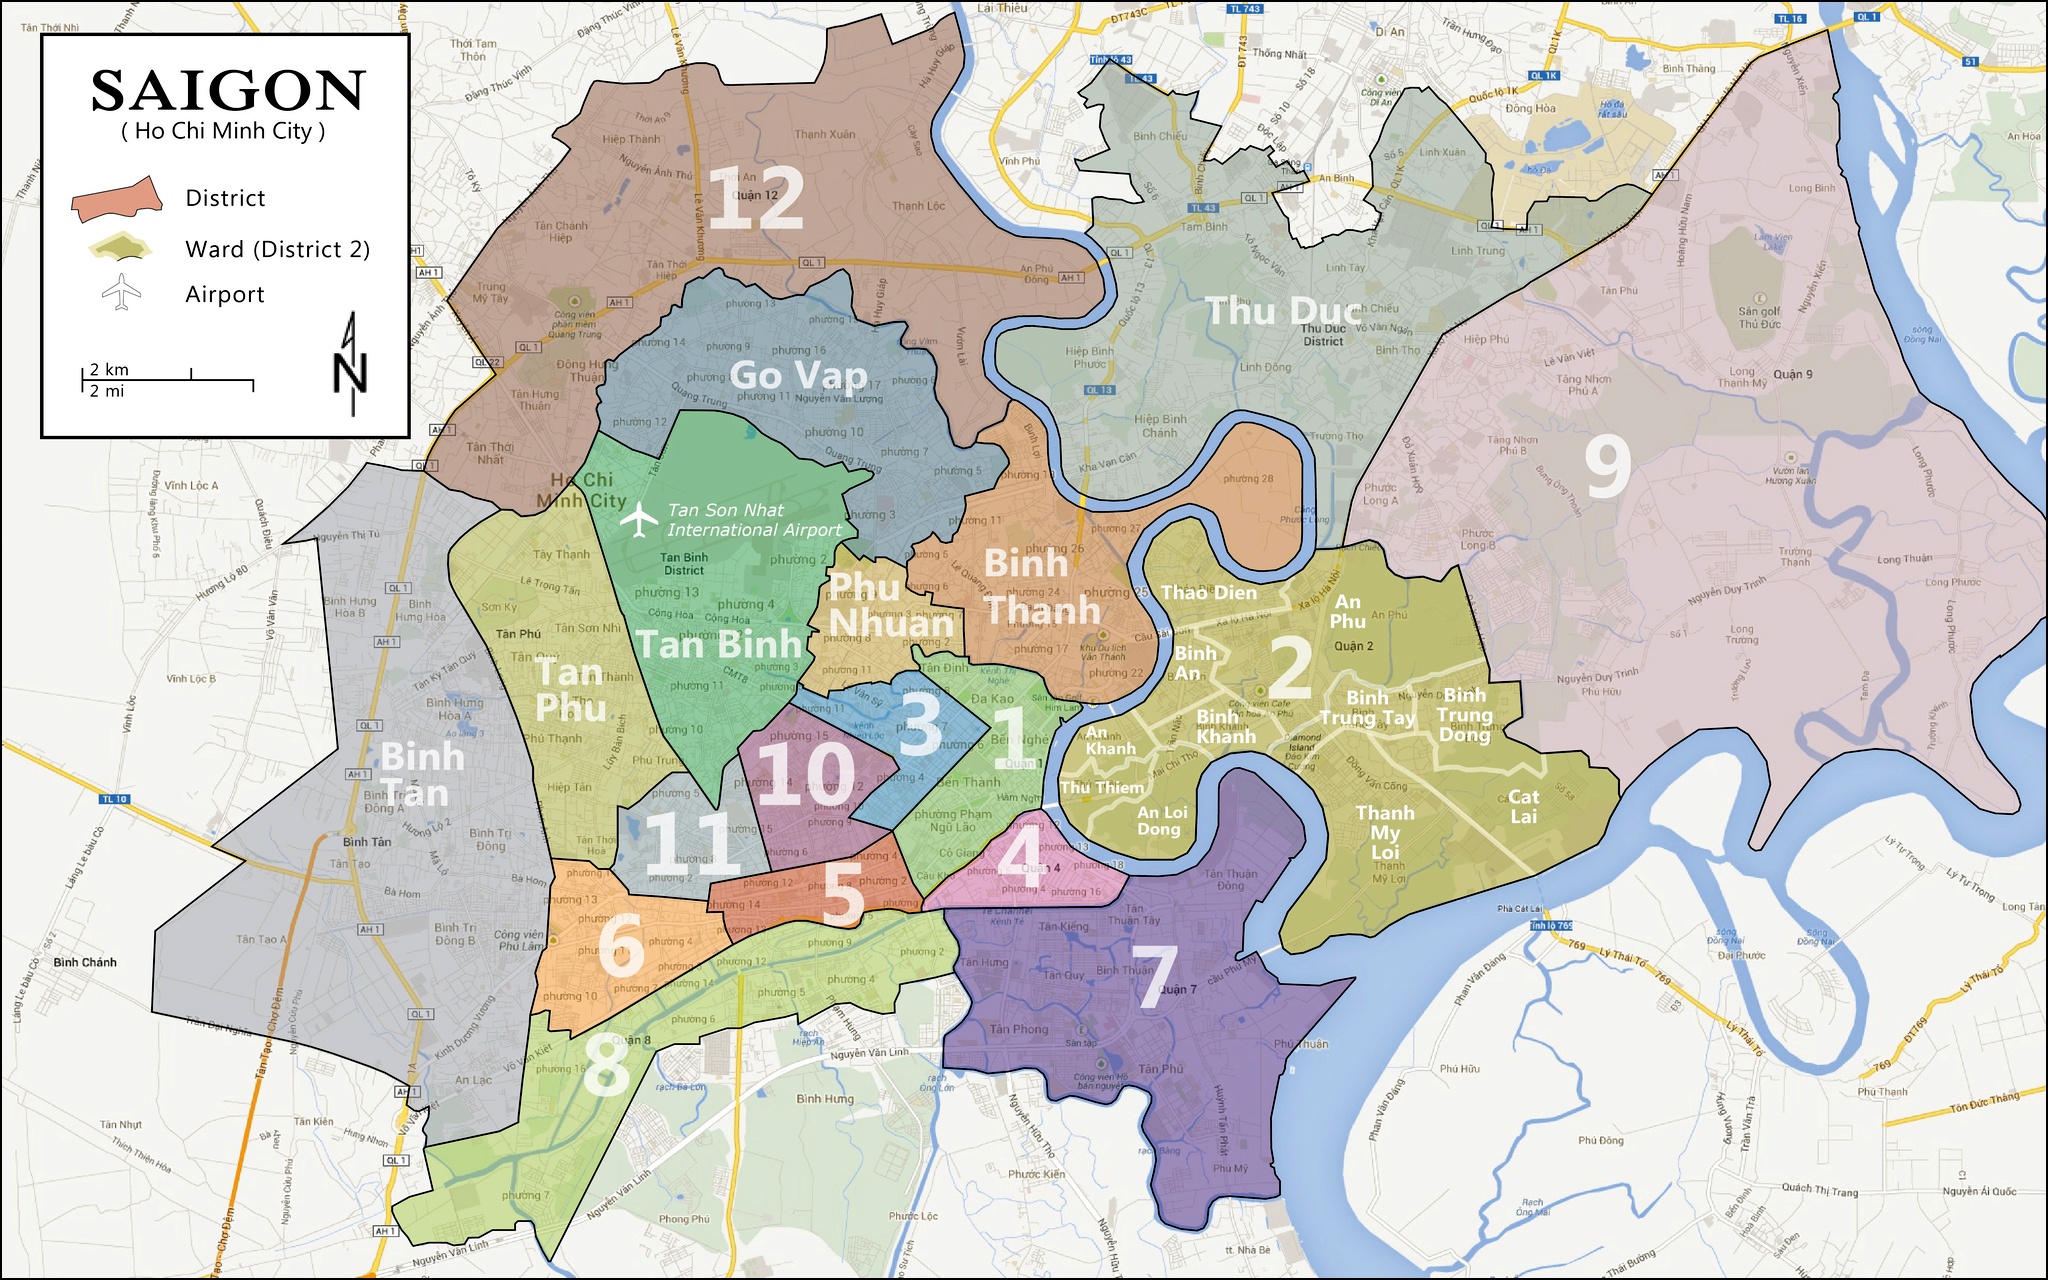 Ho Chi Minh city district map